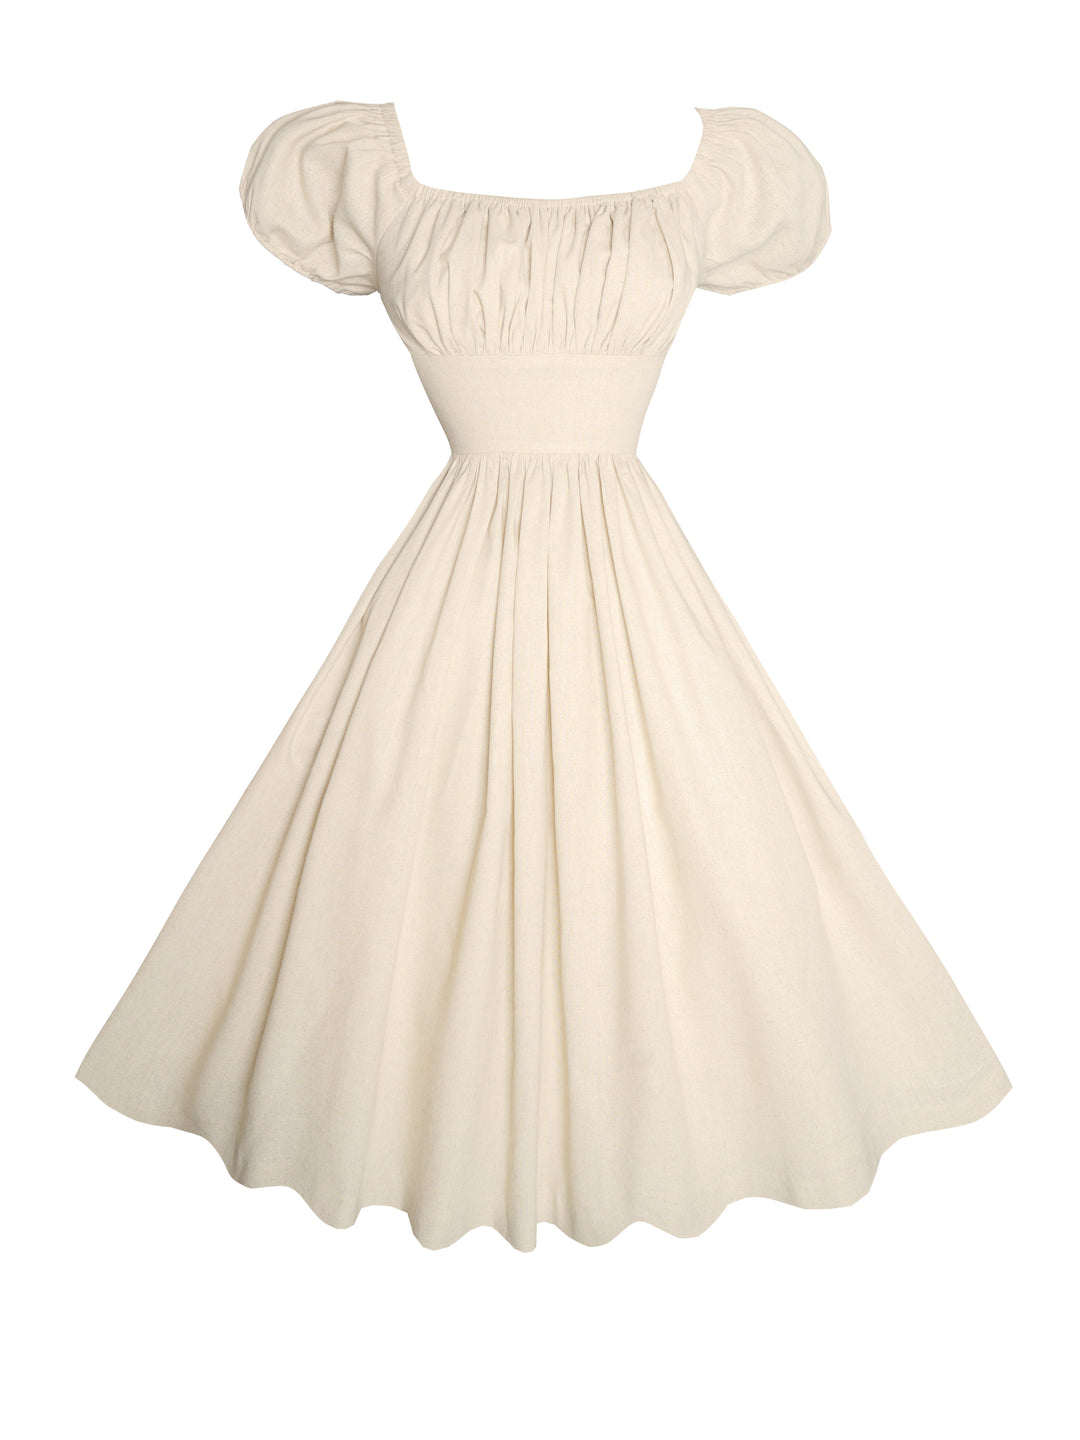 MTO - Loretta Dress in Parchment Ivory Linen